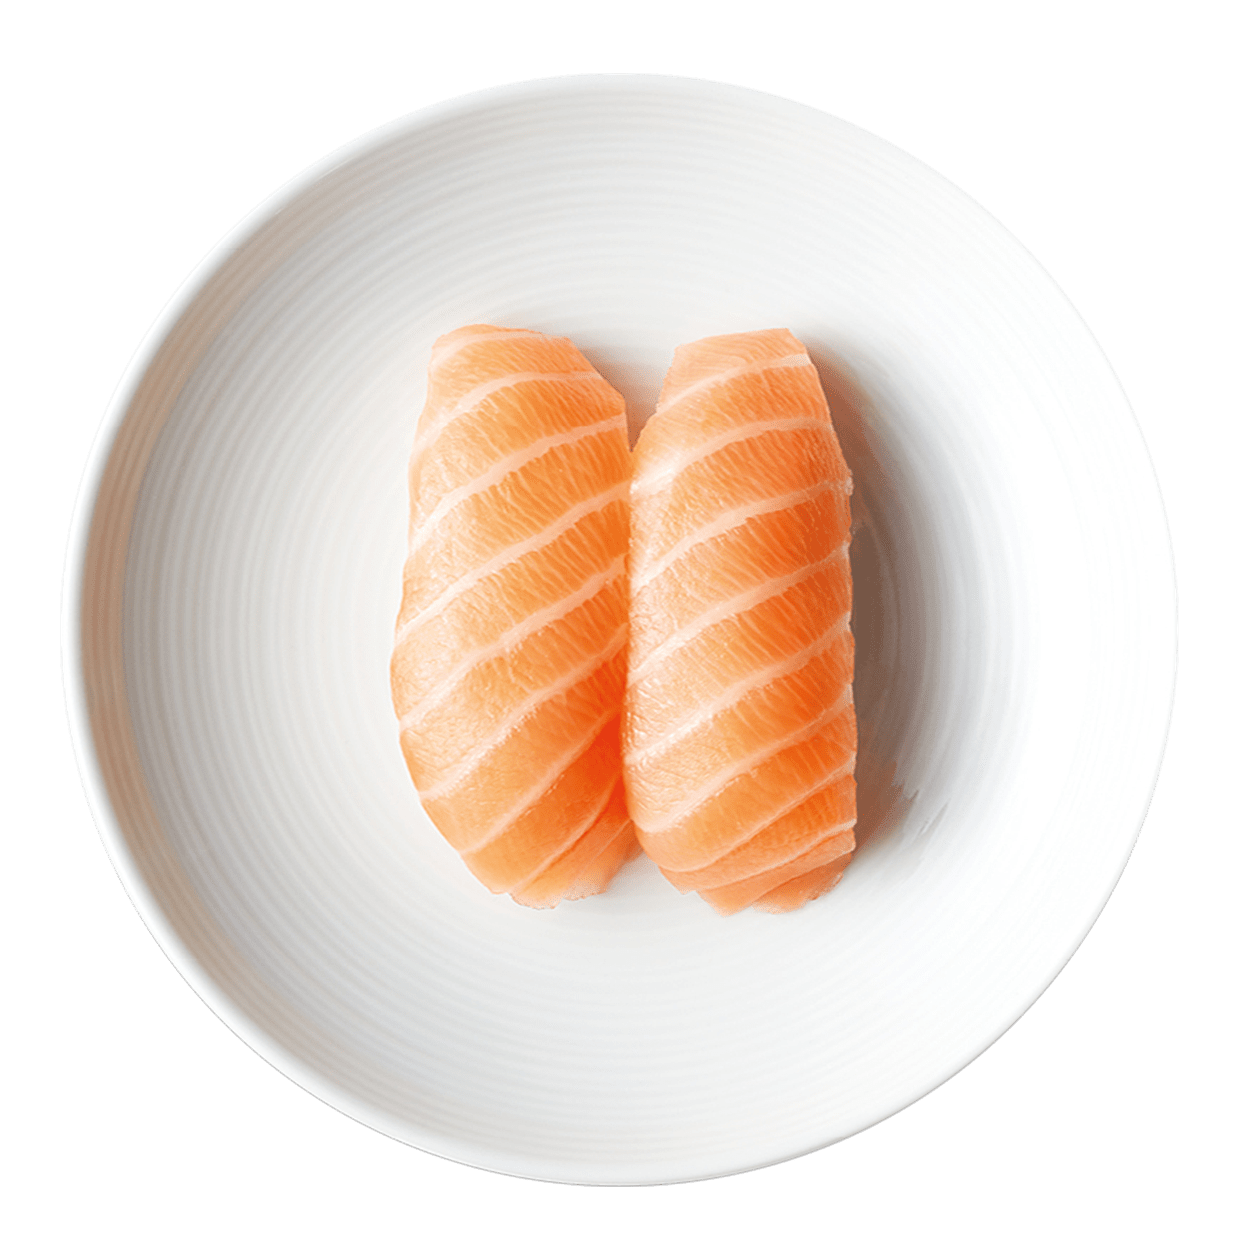 salmon nigiri